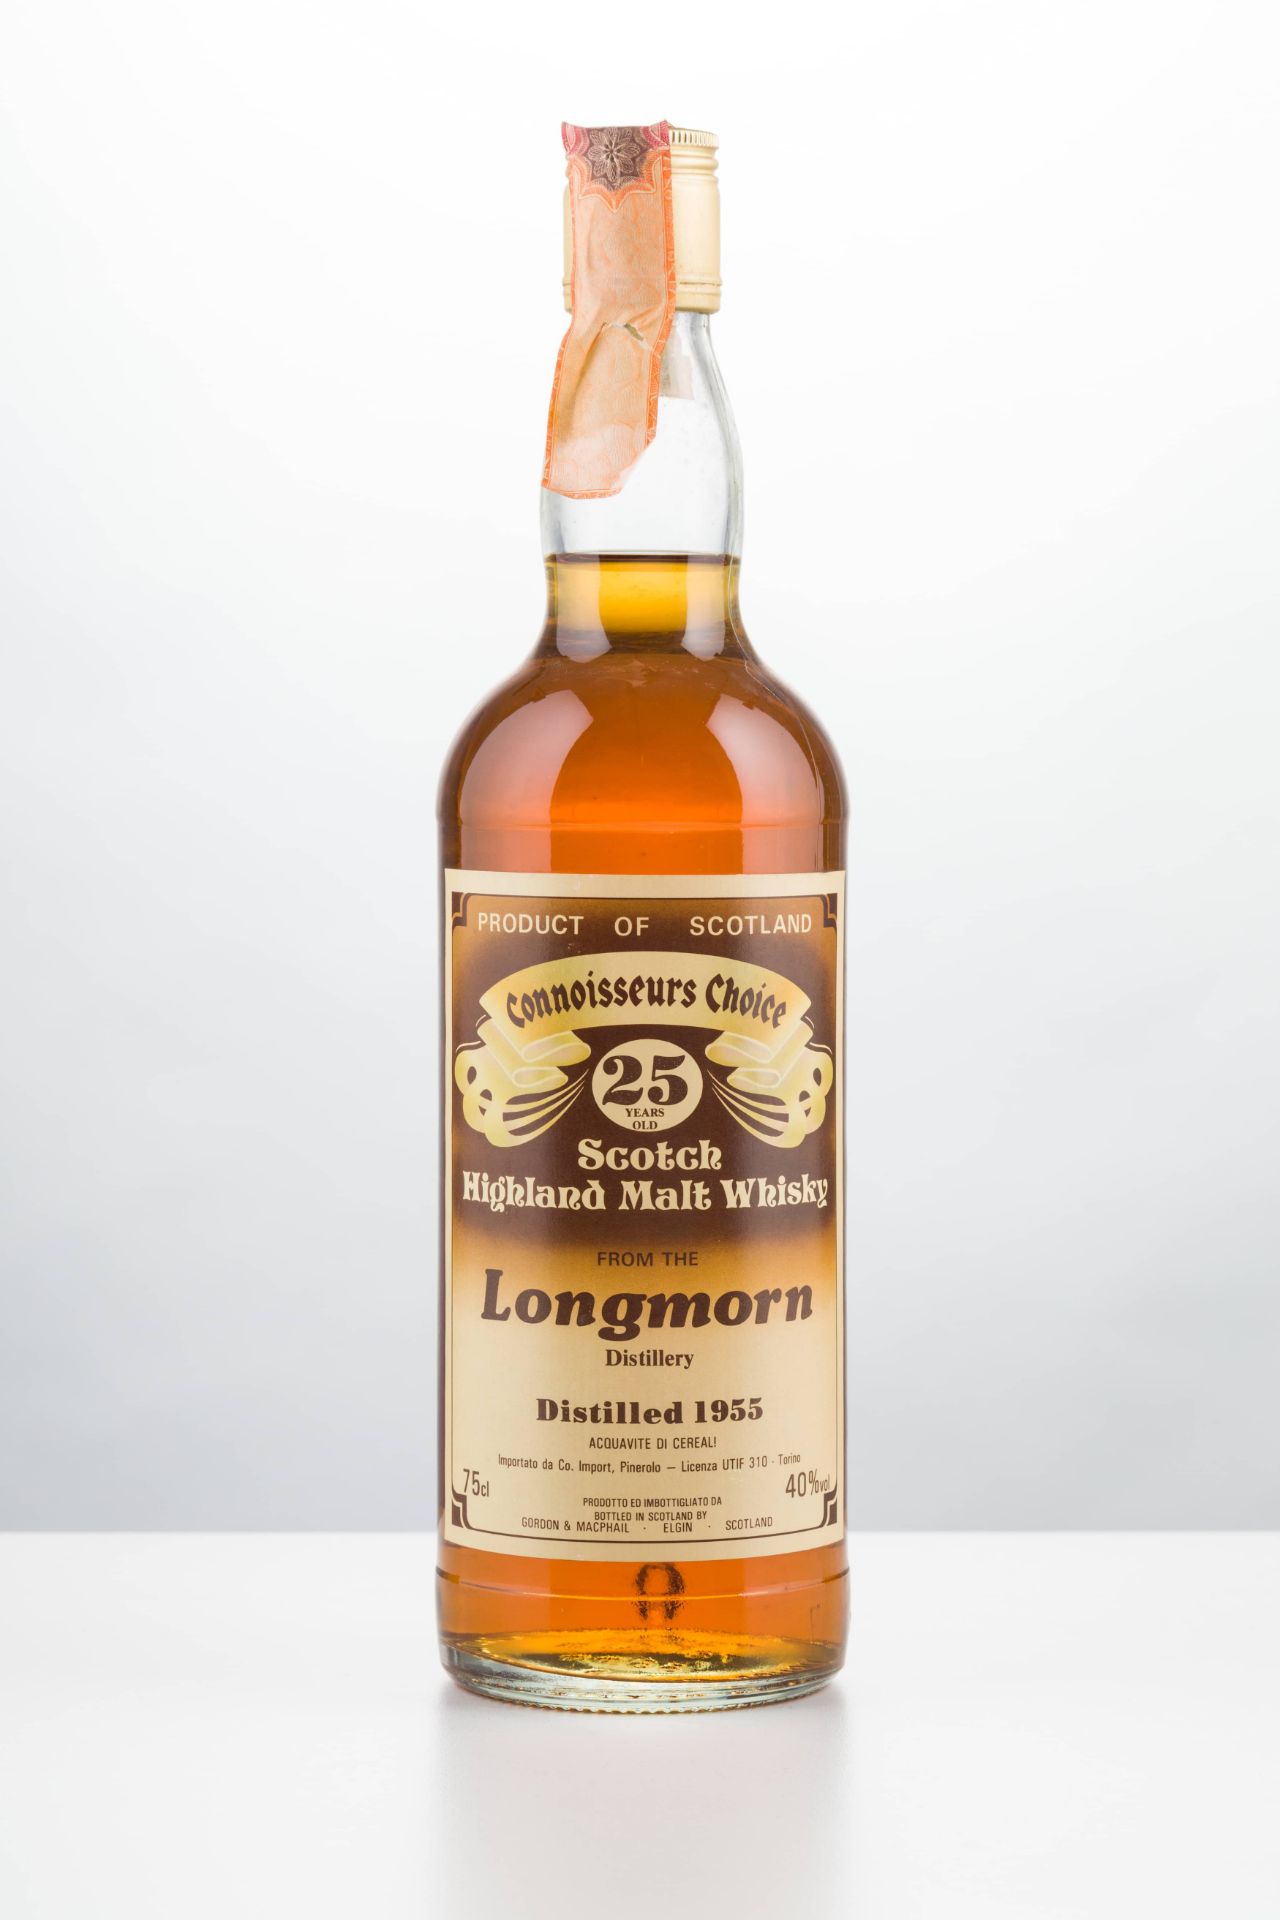 Longmorn 25 years old, Gordon&MacPhail Connoisseurs Choice